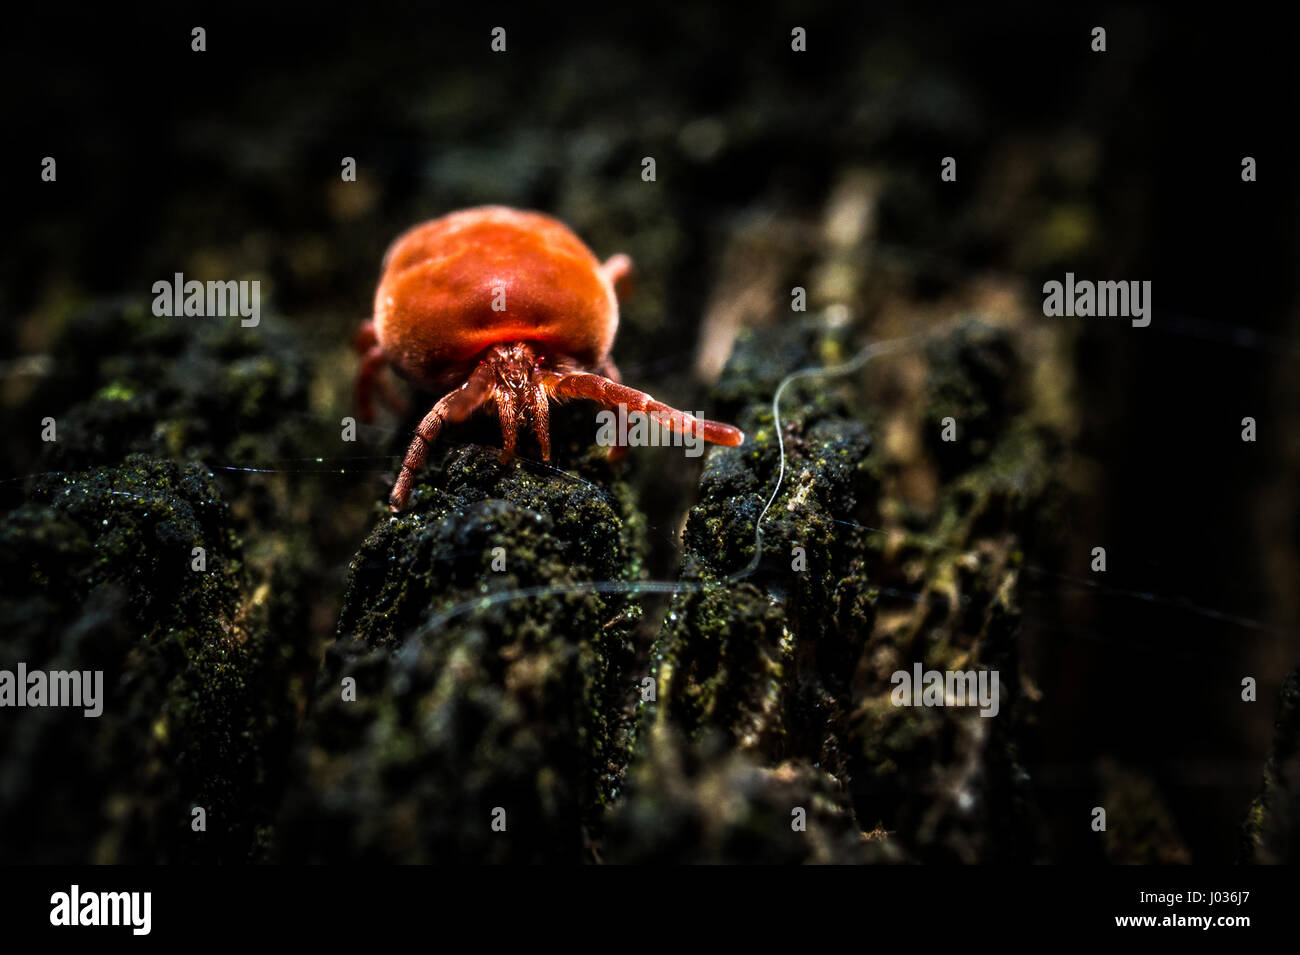 Parasite Red velvet mite on dry tree macro photography Stock Photo